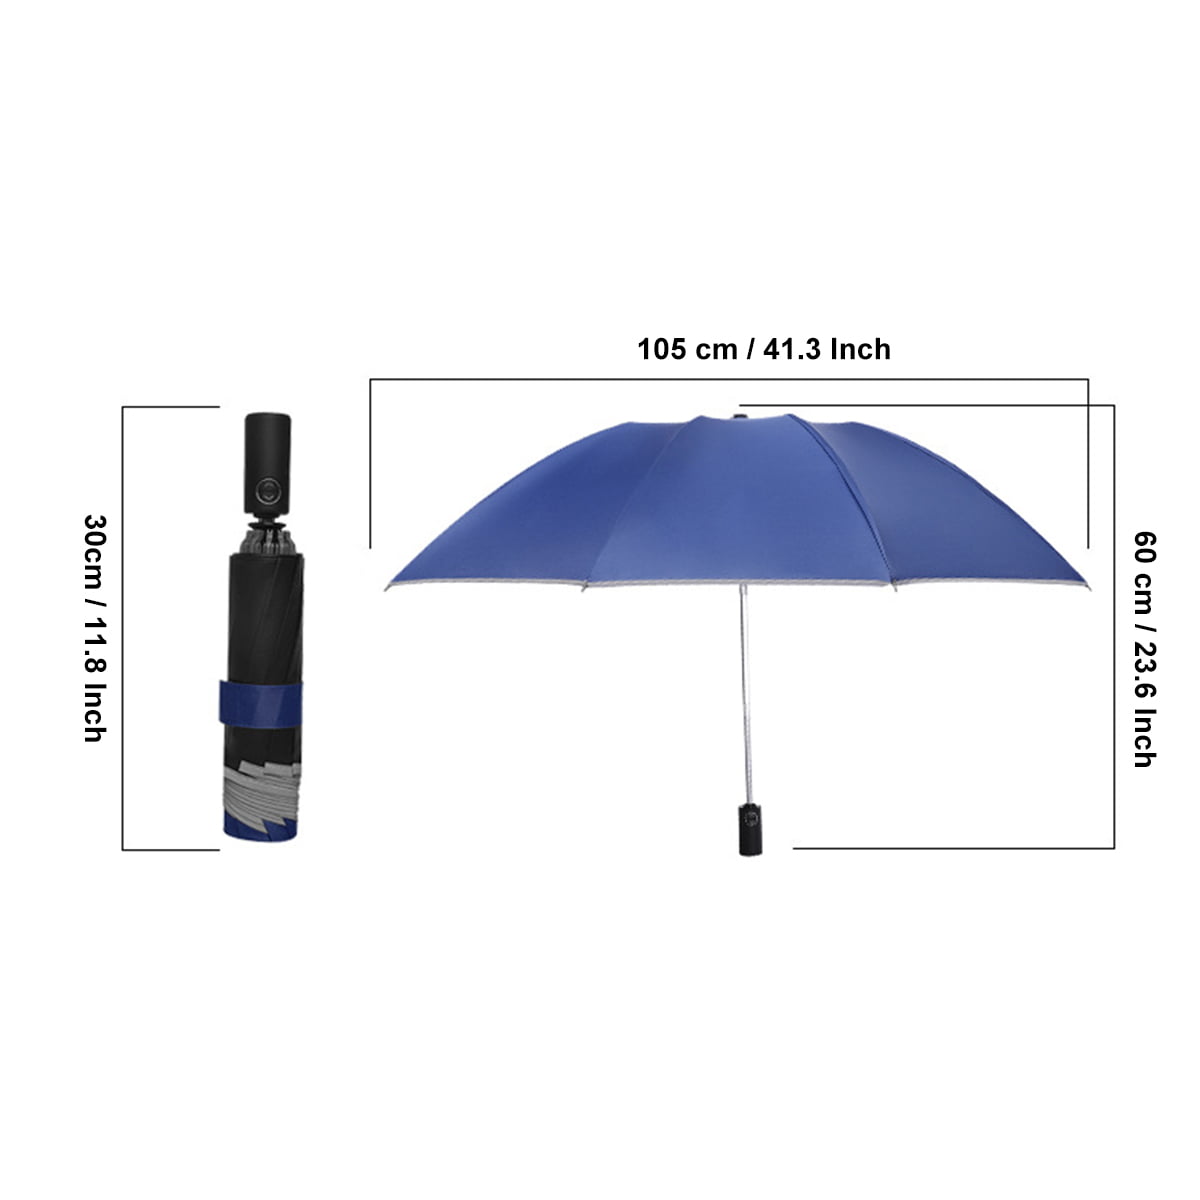 Windproof Travel Umbrella with Teflon Coating FDJASGY Auto Open Close Lightweight Sun&Rain Umbrella with 10 Rib Construction and Reflective Stripe Zipper Pouch 